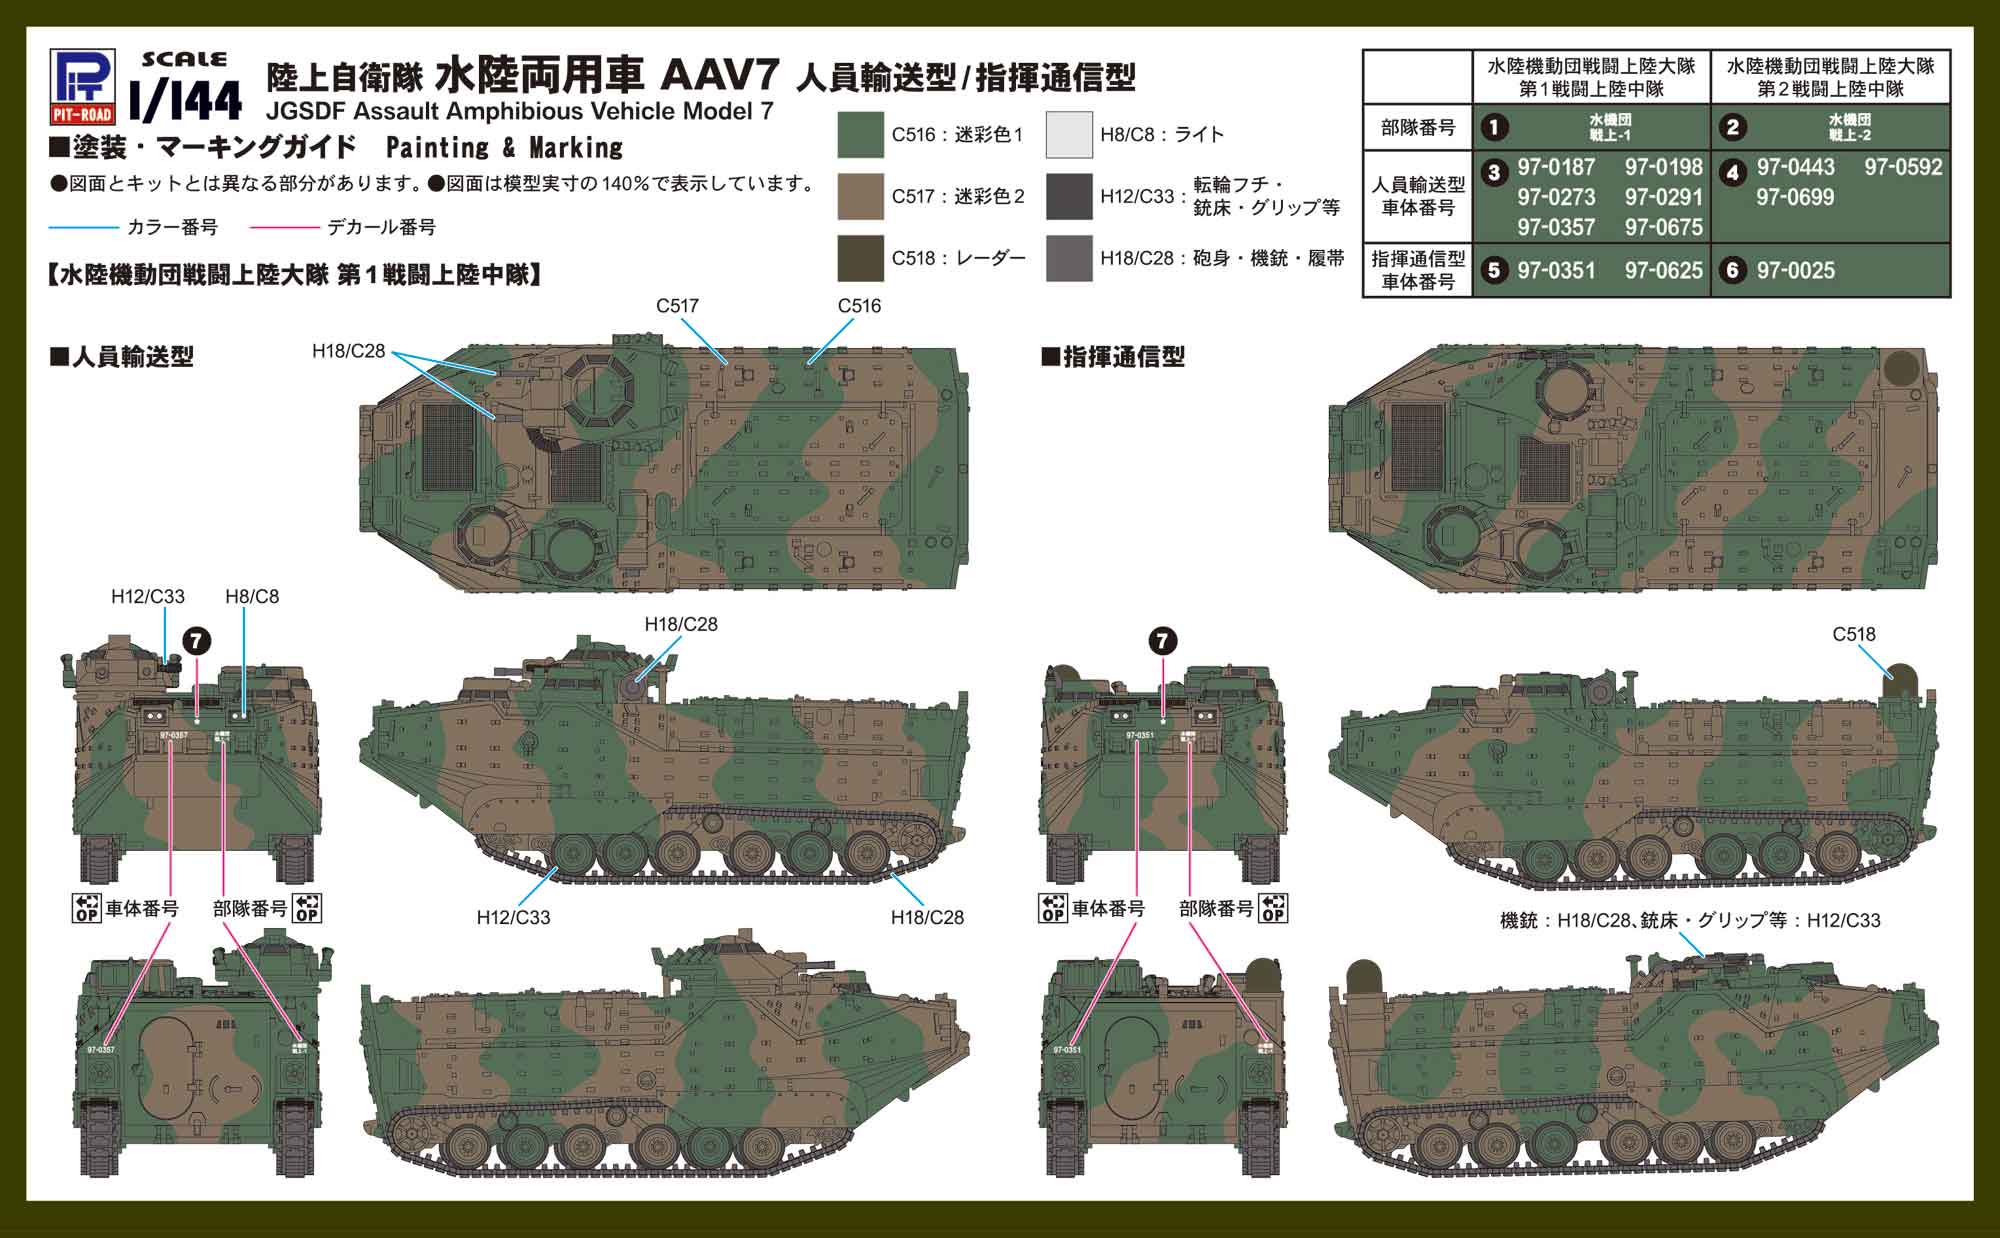 SGK08 1/144 陸上自衛隊 水陸両用車 AAV7 人員輸送型/指揮通信型 